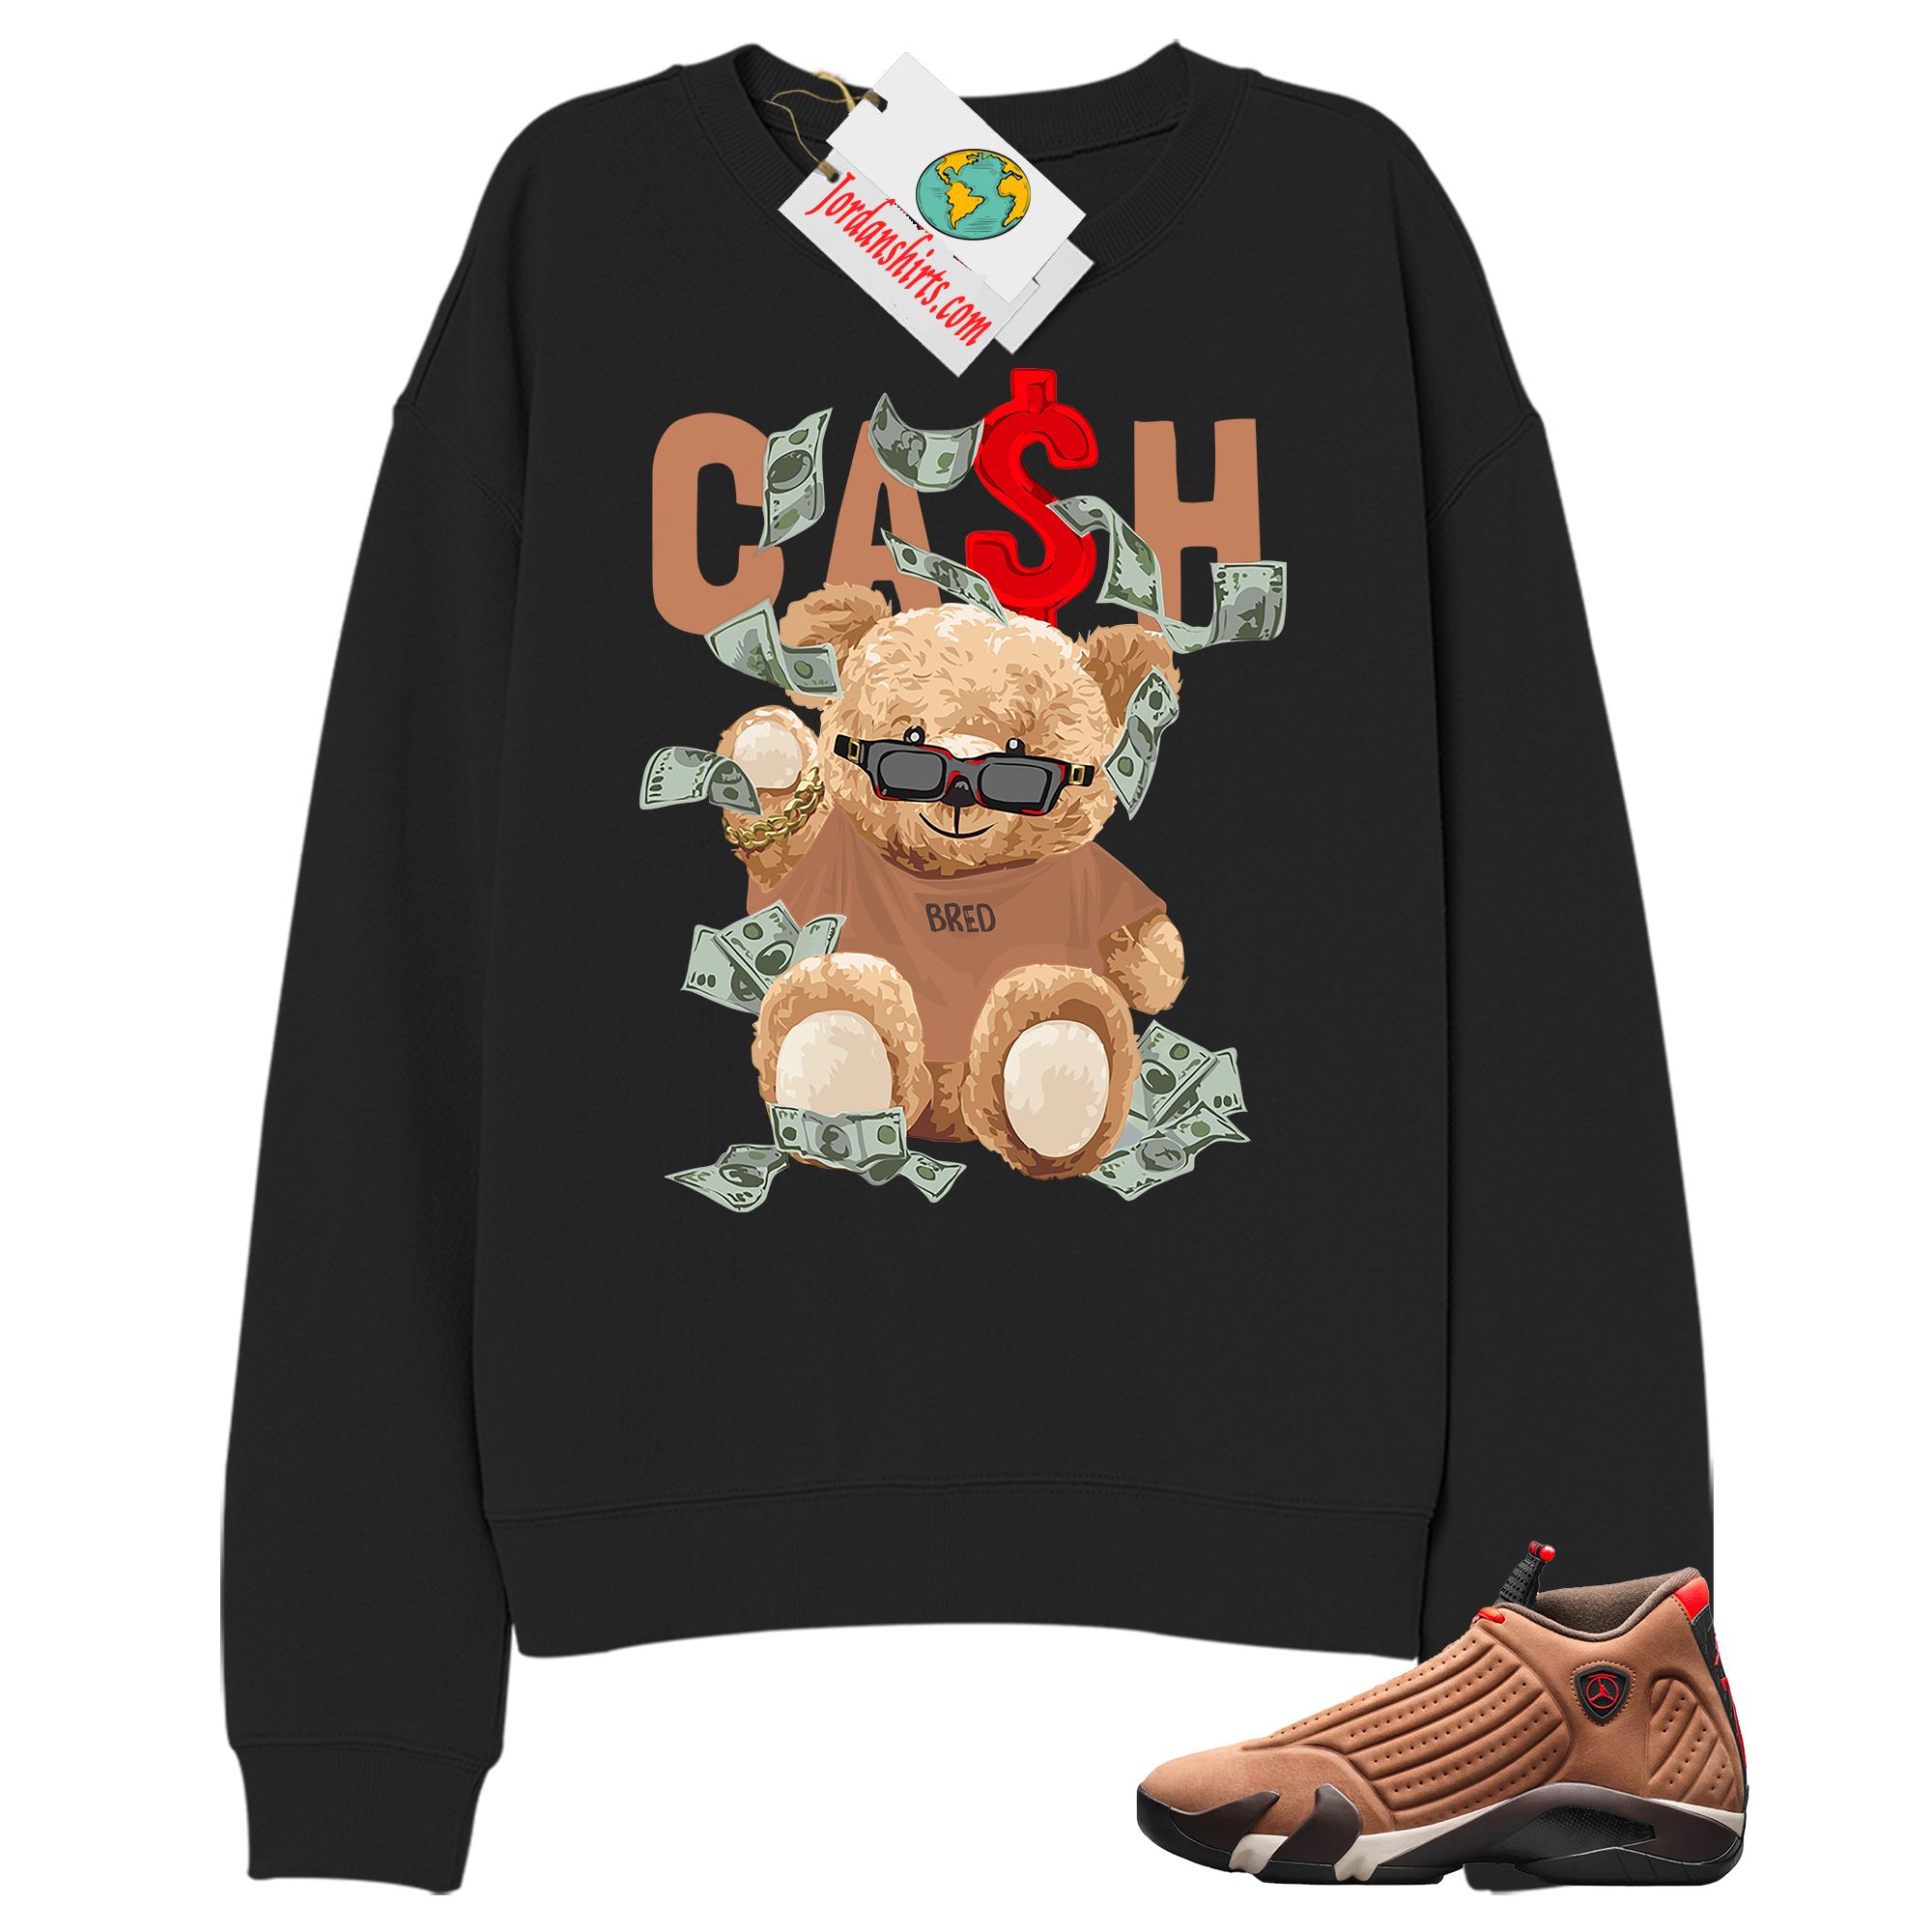 Jordan 14 Sweatshirt, Cash Teddy Bear In Sunglasses Black Sweatshirt Air Jordan 14 Winterized 14s Full Size Up To 5xl